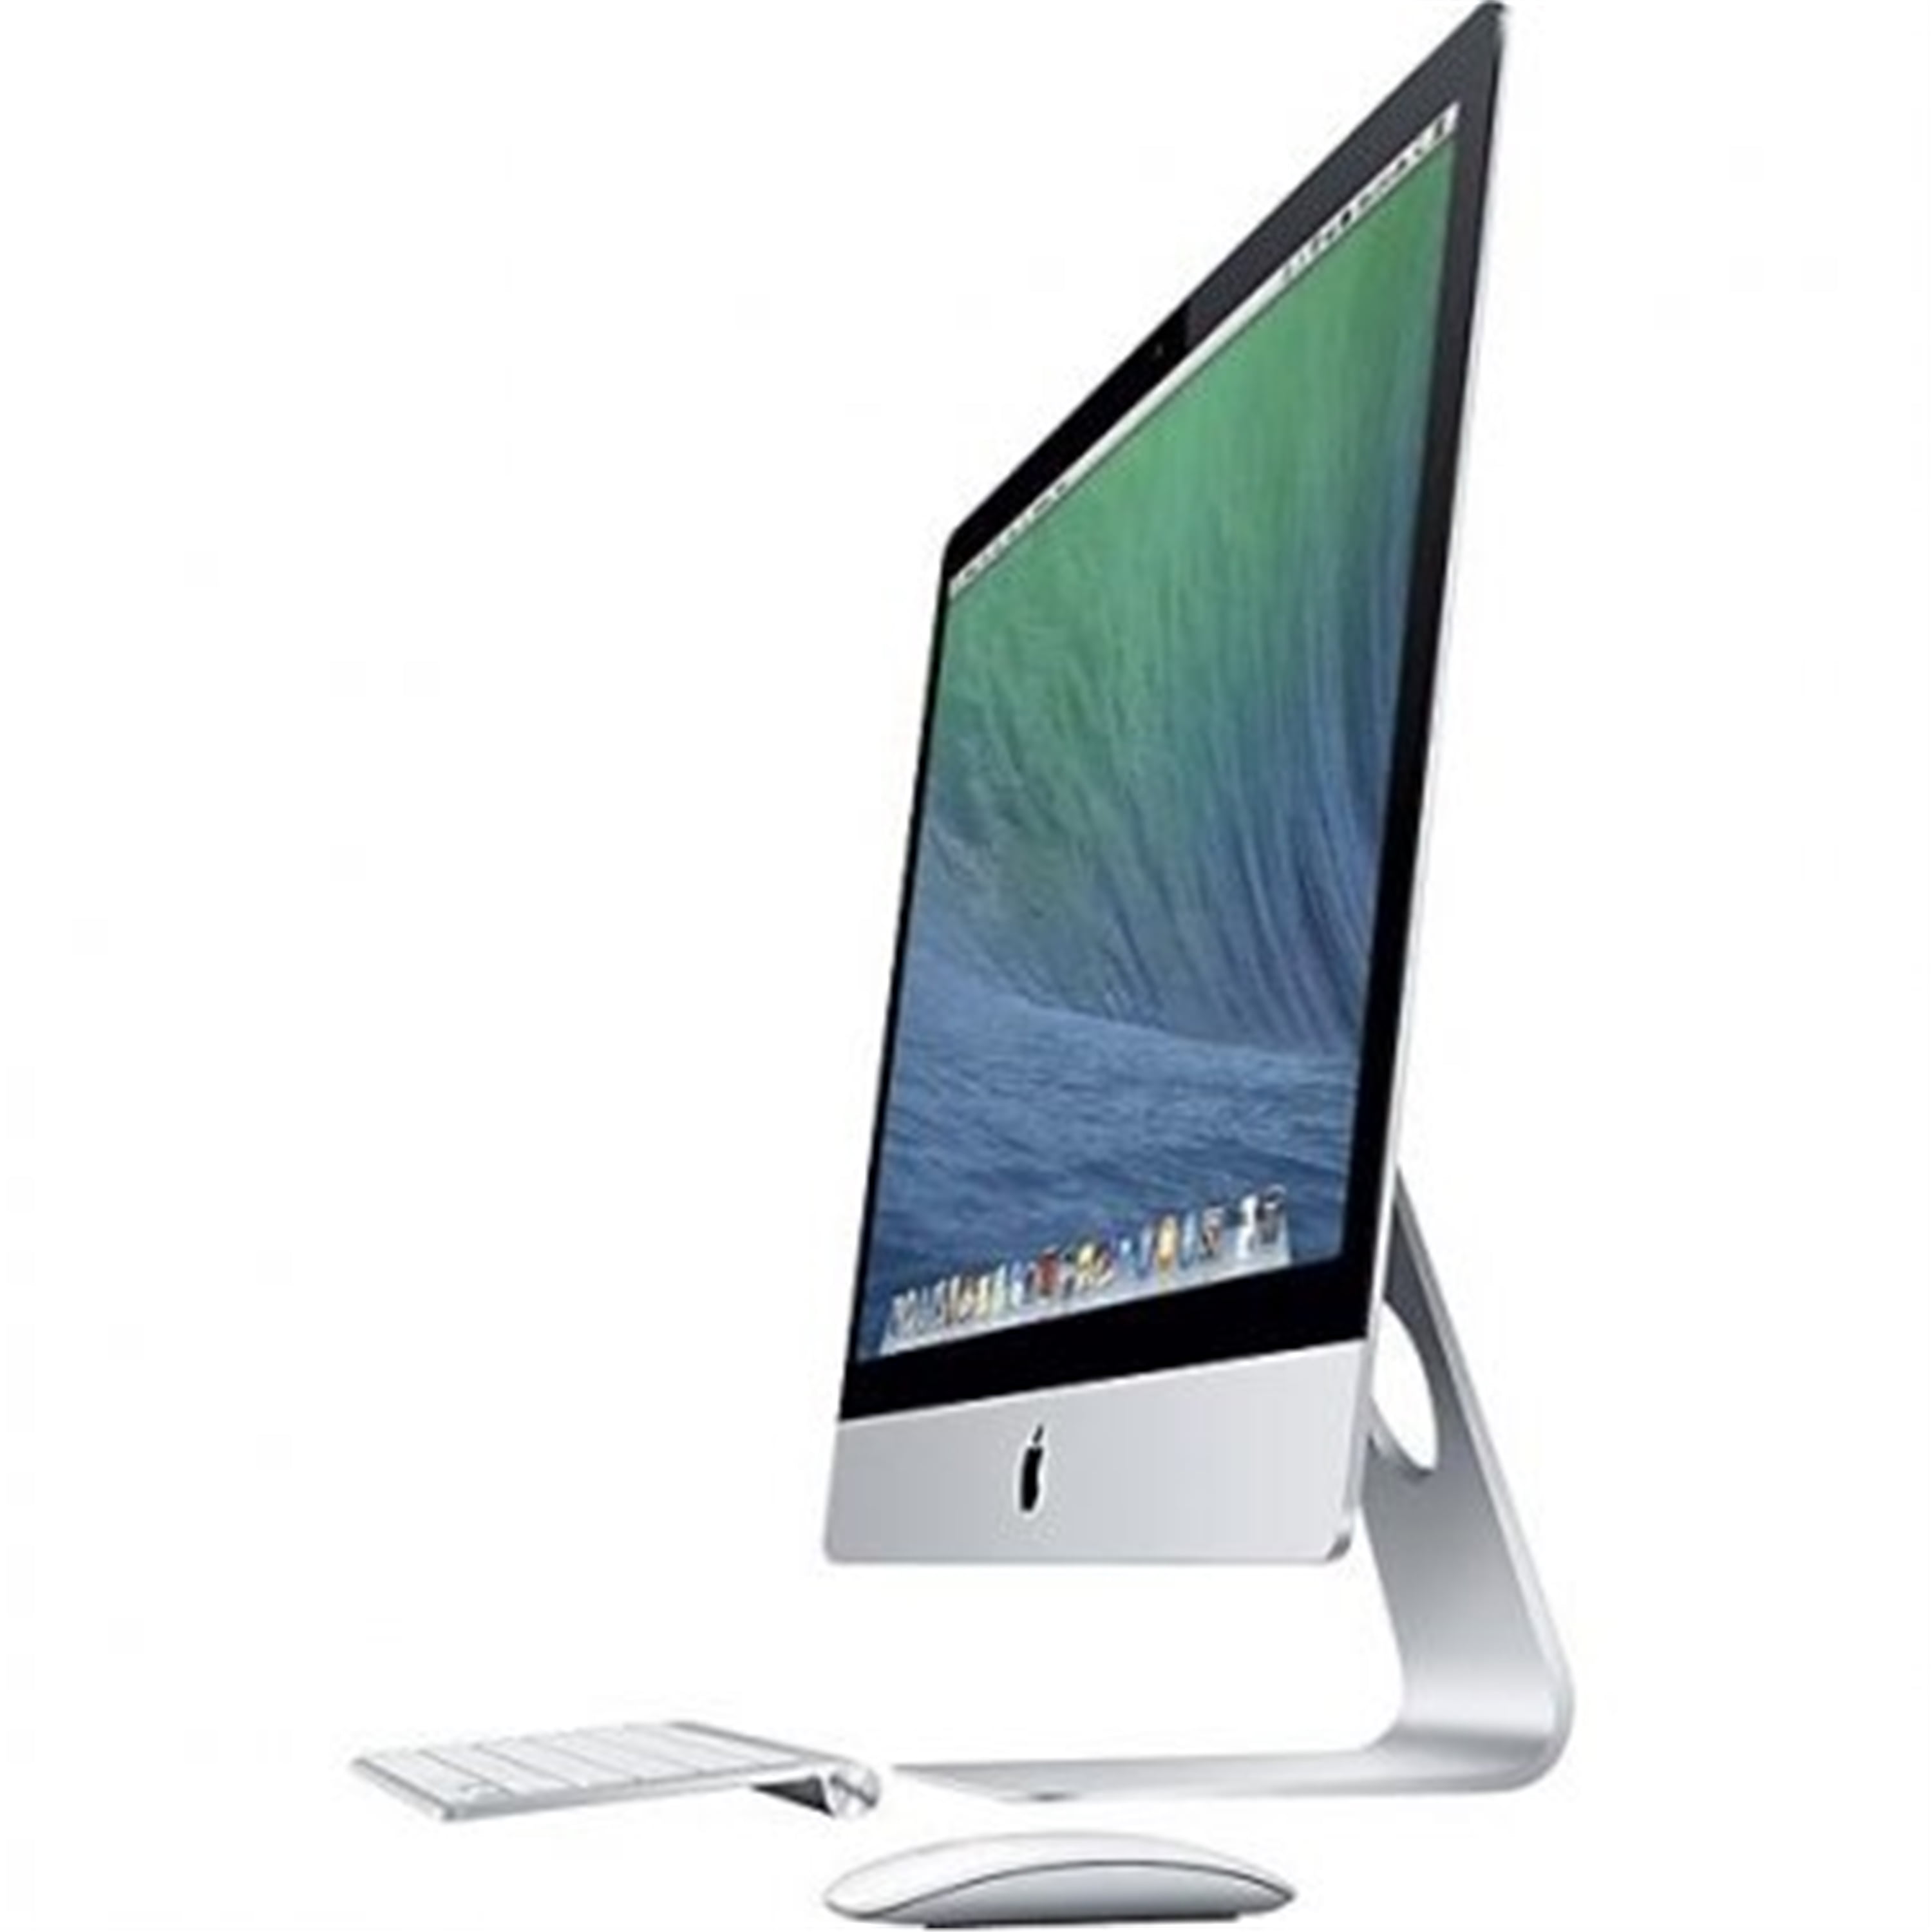 Apple Me087lla 215 8gb 1tb Core™ I5 4570s 29ghz Mac Osx Silver